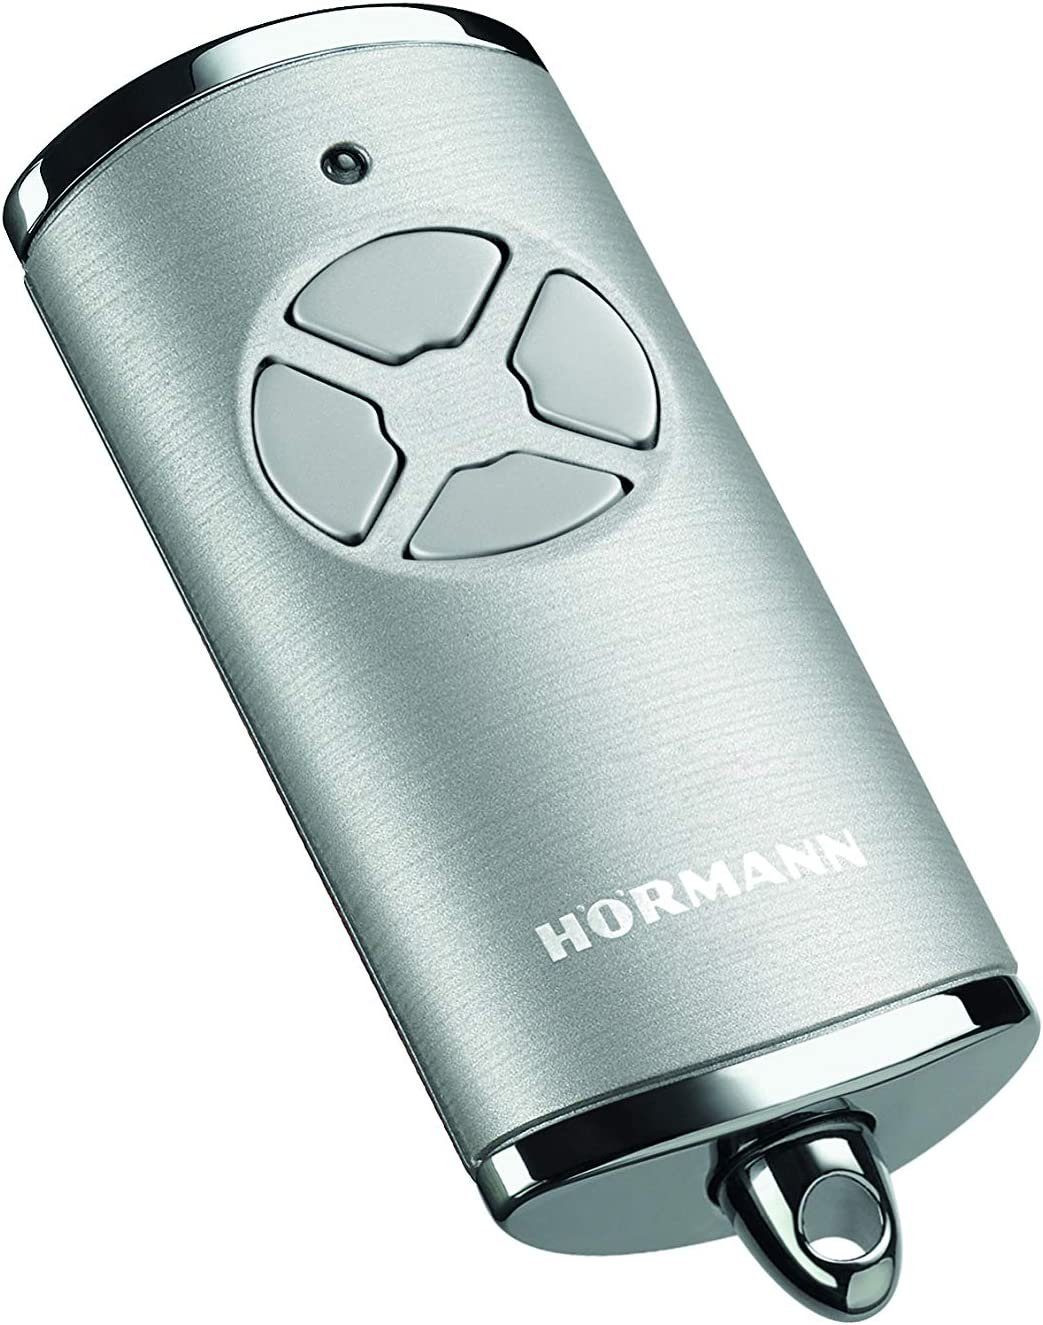 Hörmann Garagentor-Funkempfänger Hörmann Handsender HSE4 868-BS Hochglanz  Chrom Silber Fernbedienung